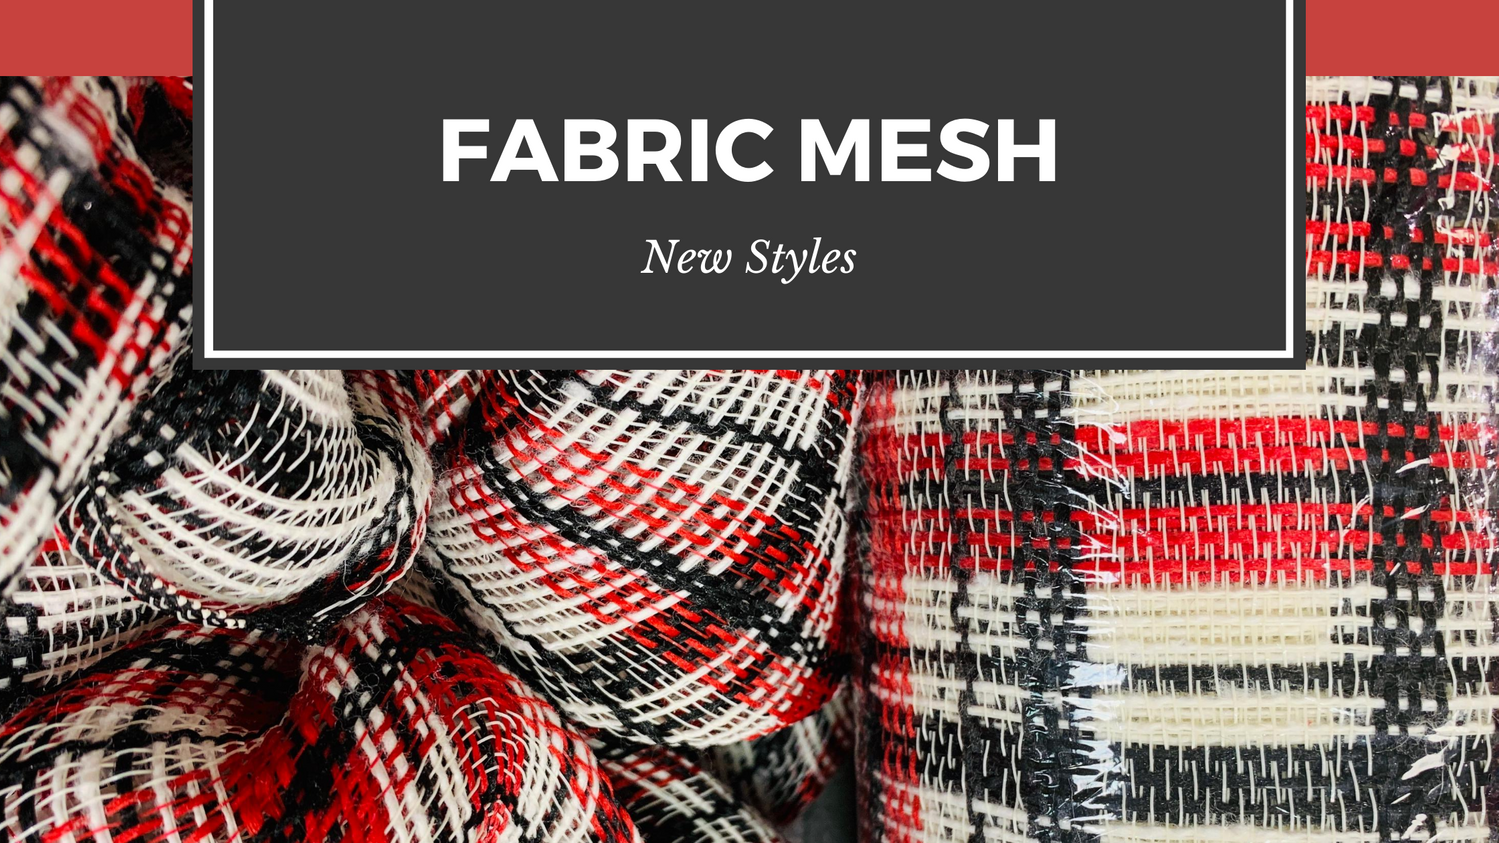 New Fabric Mesh Styles